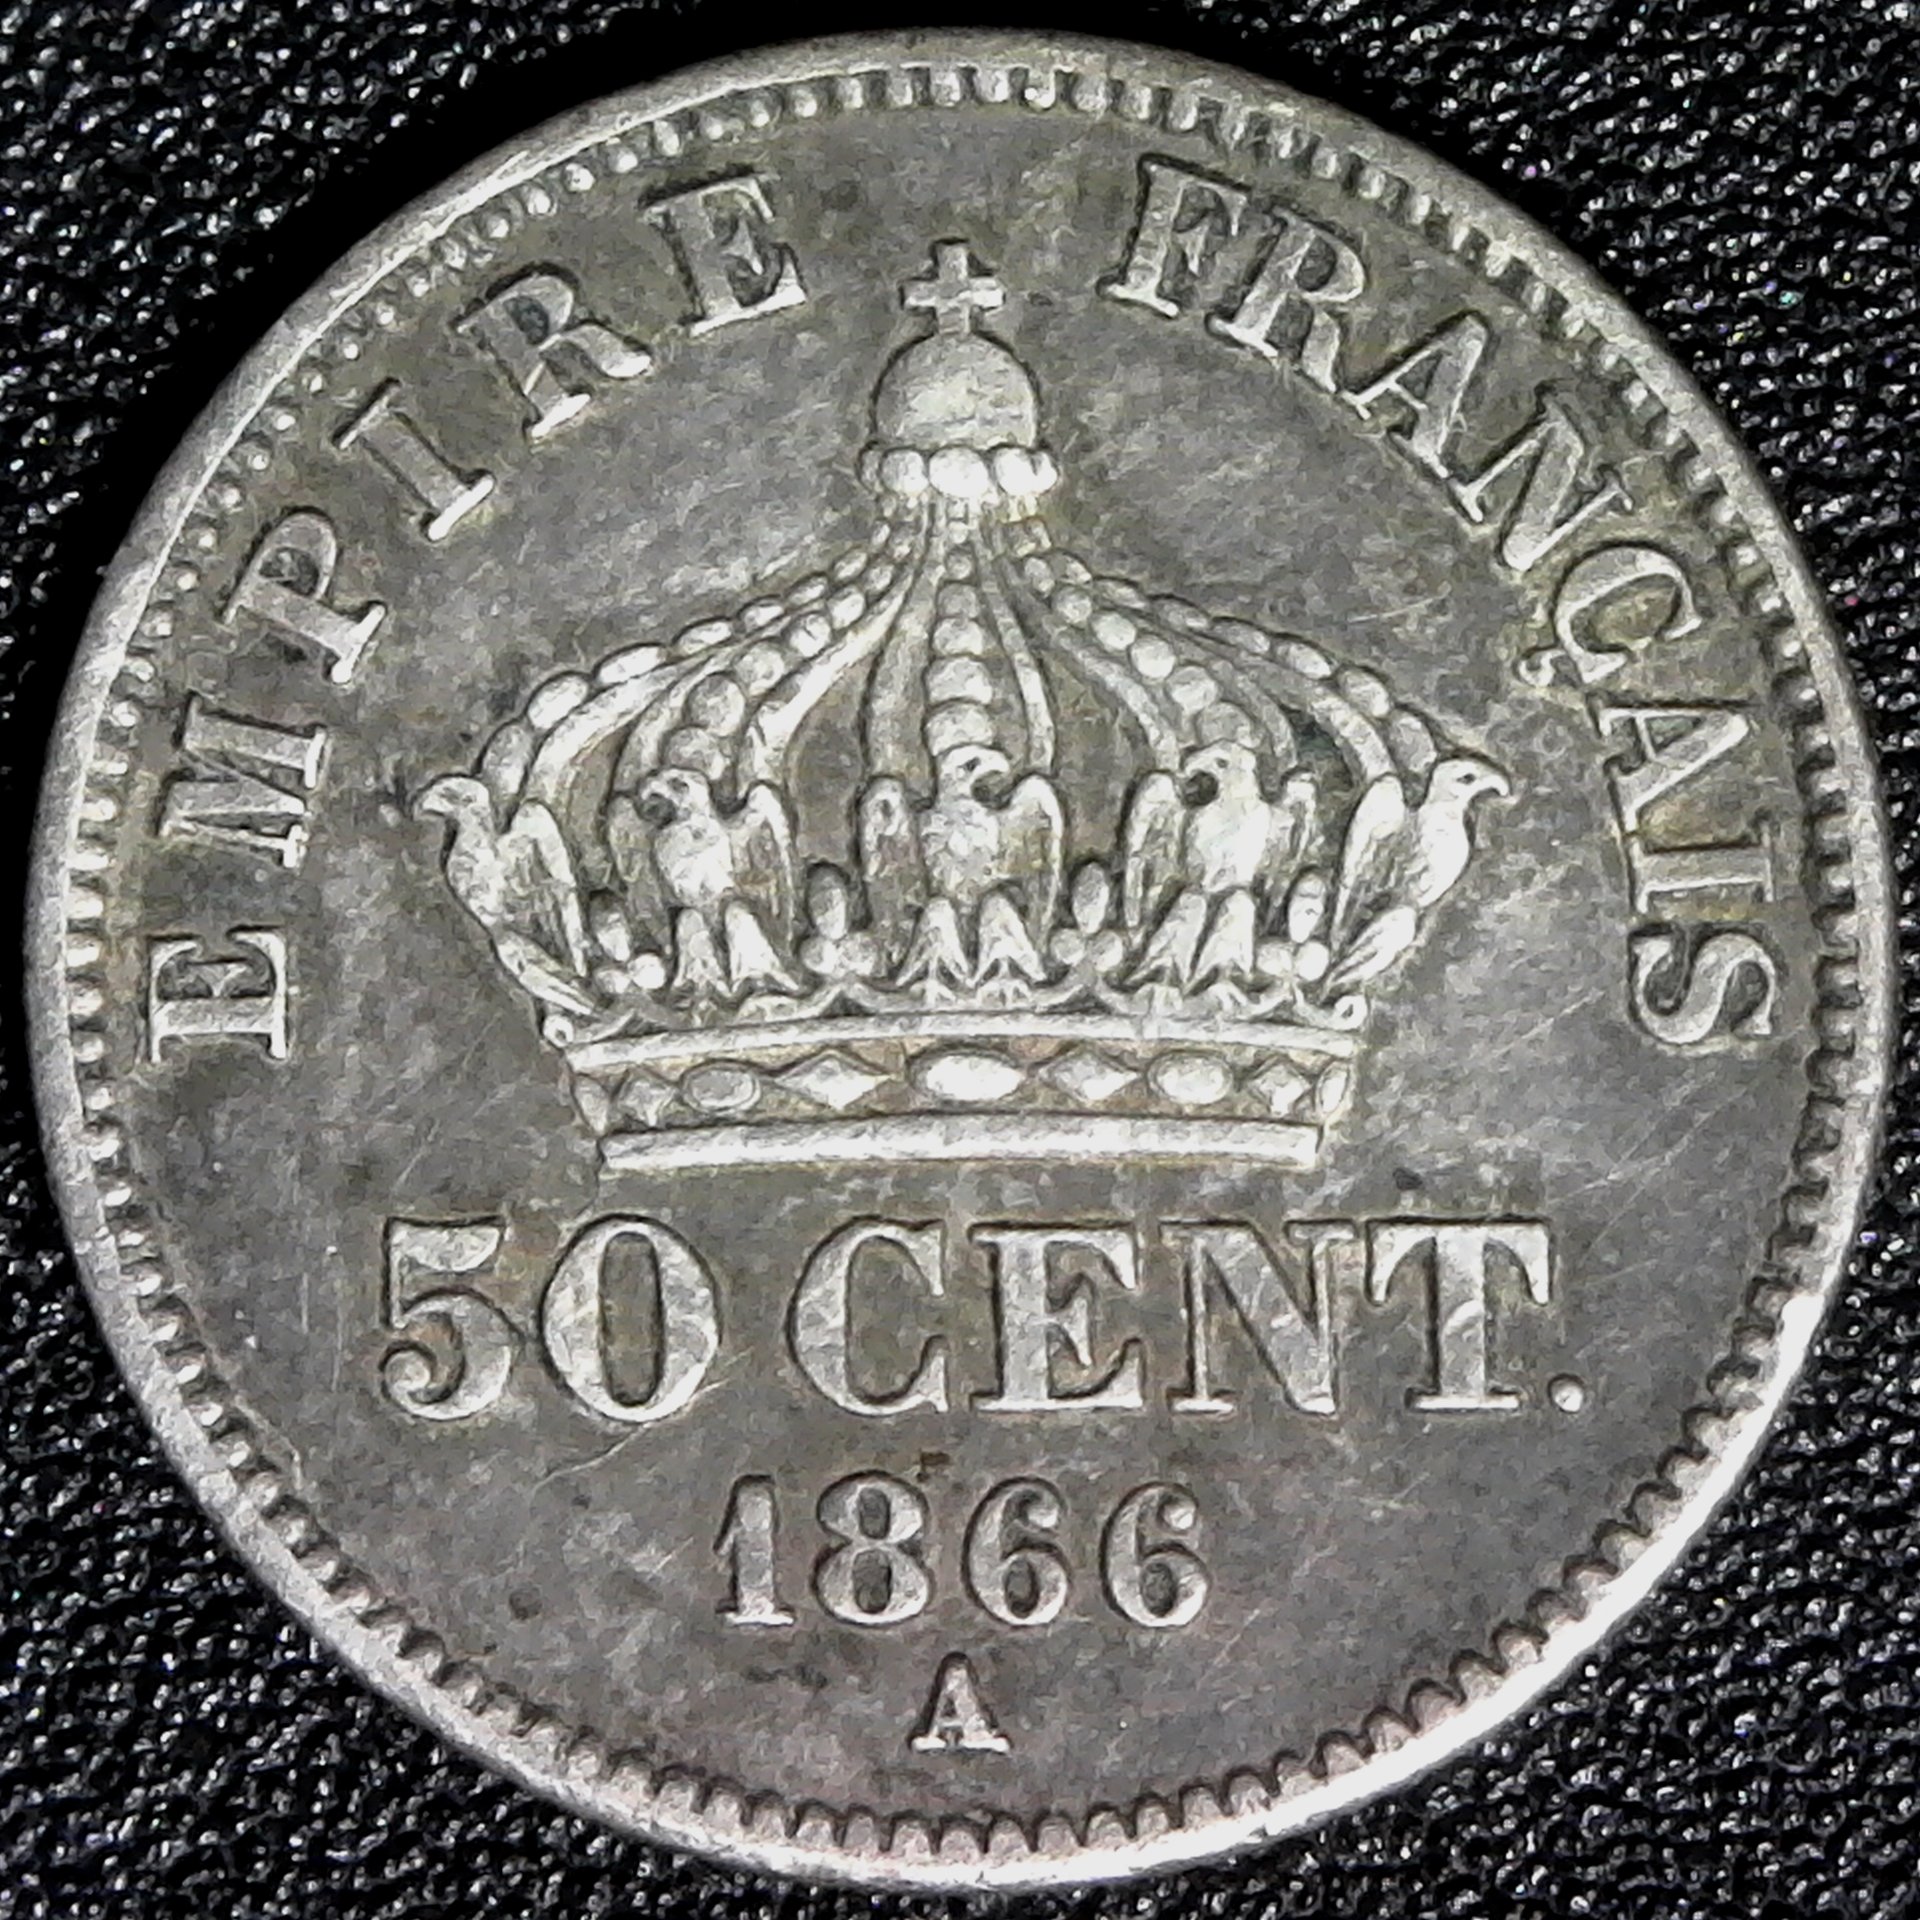 France 50 centimes 1866A obv.jpg